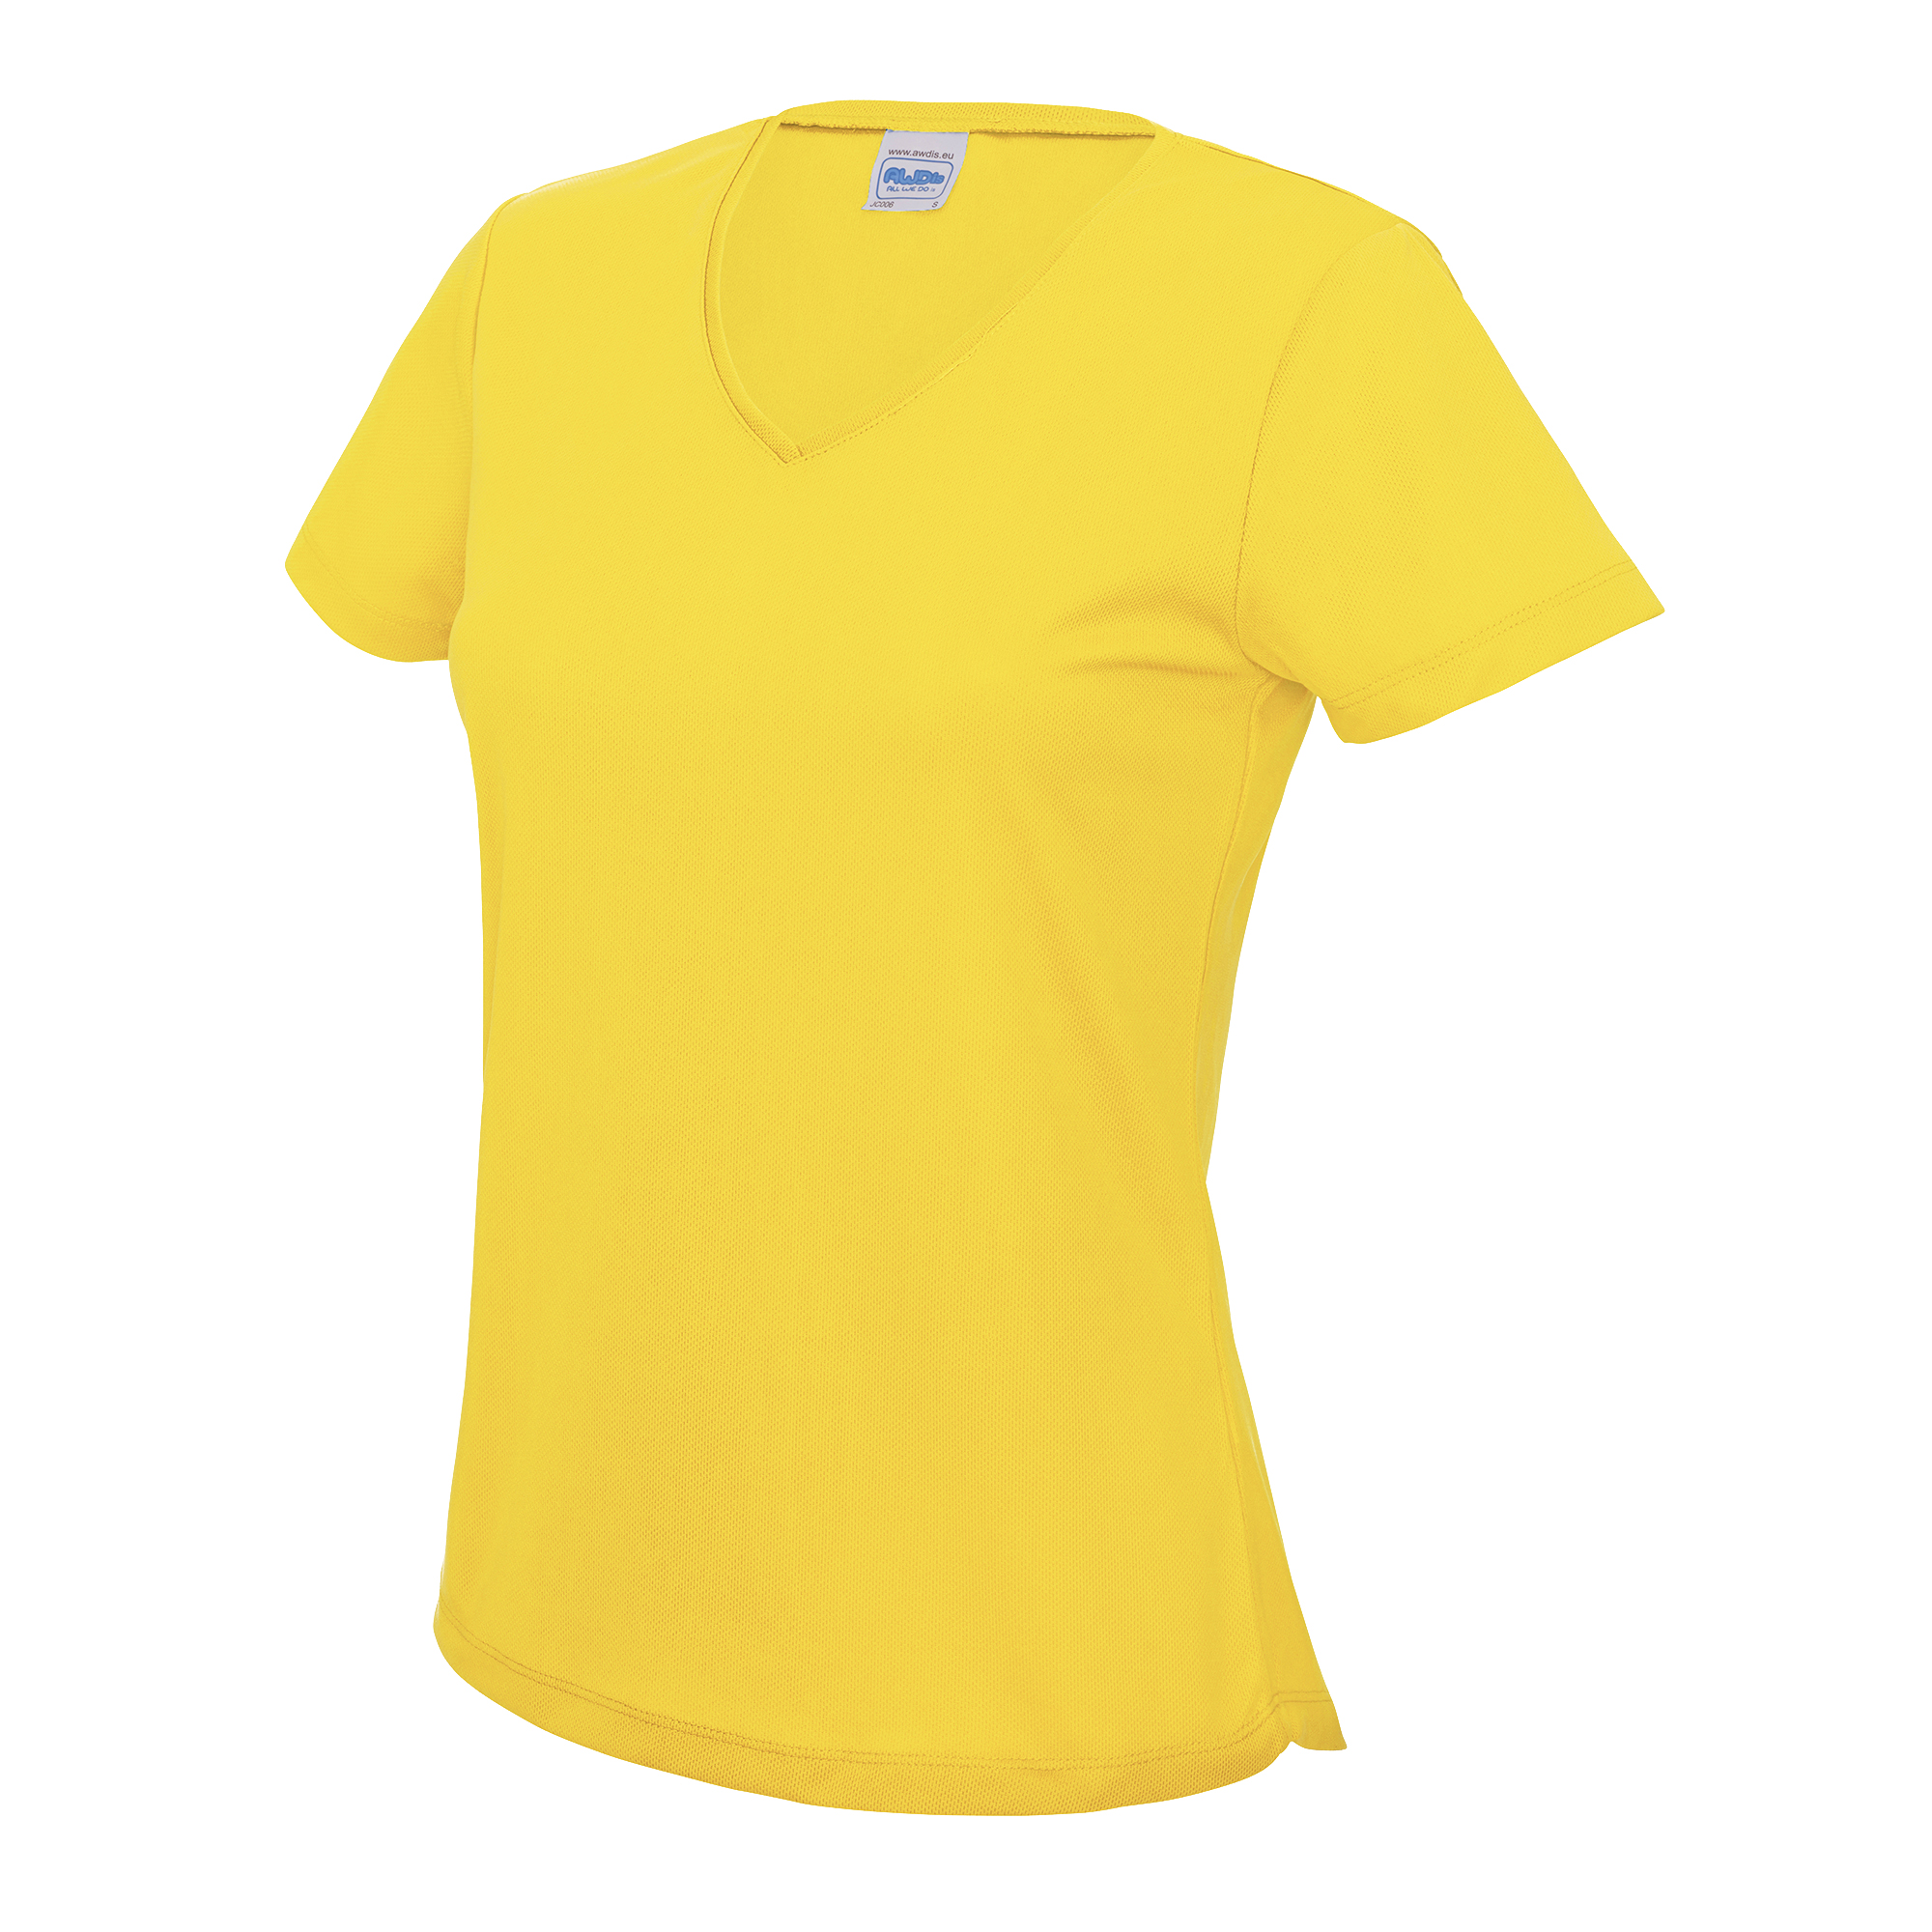 Camiseta De Manga Corta Con Cuello En Forma De V. Awdis - amarillo - 